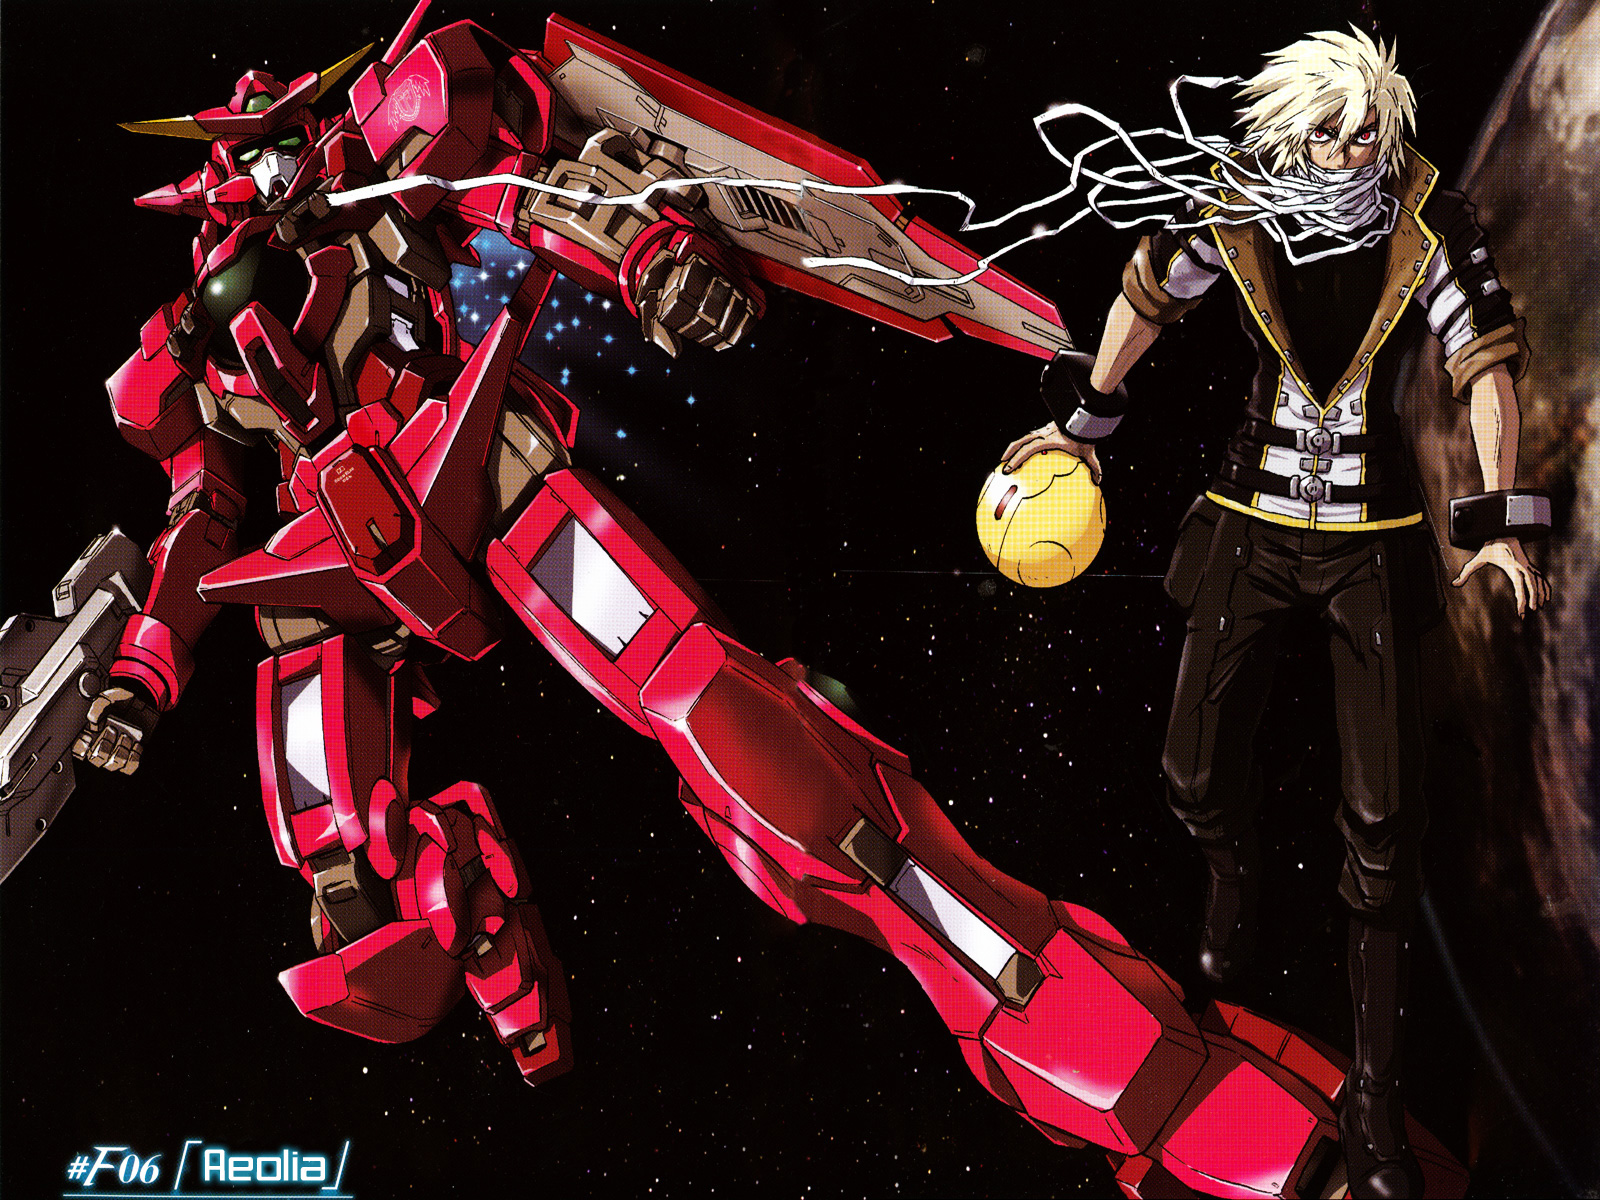 Anime Mobile Suit Gundam 00 Wallpaper